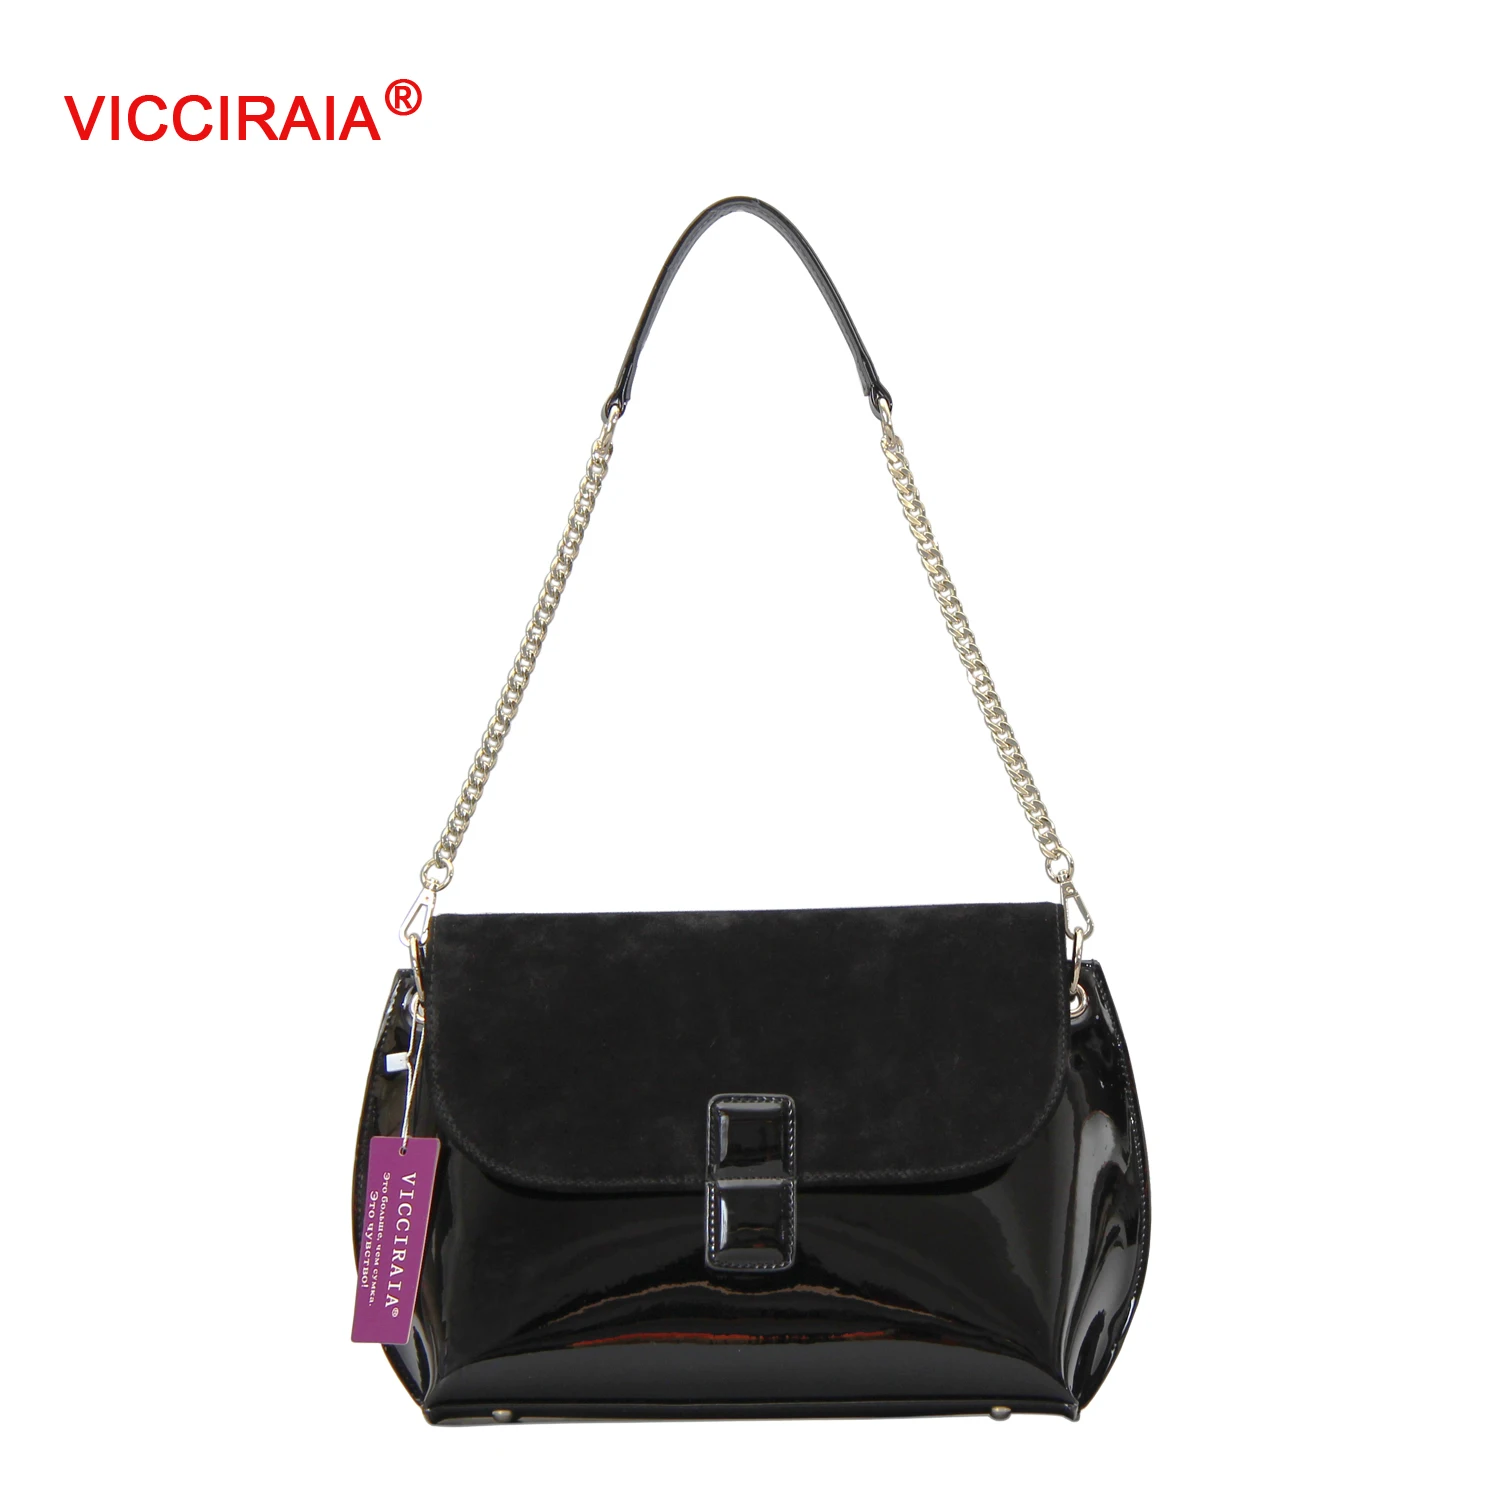 ФОТО VICCIRAIA New Imitation Leather Lady Handbags Fashion PU Leather Totes